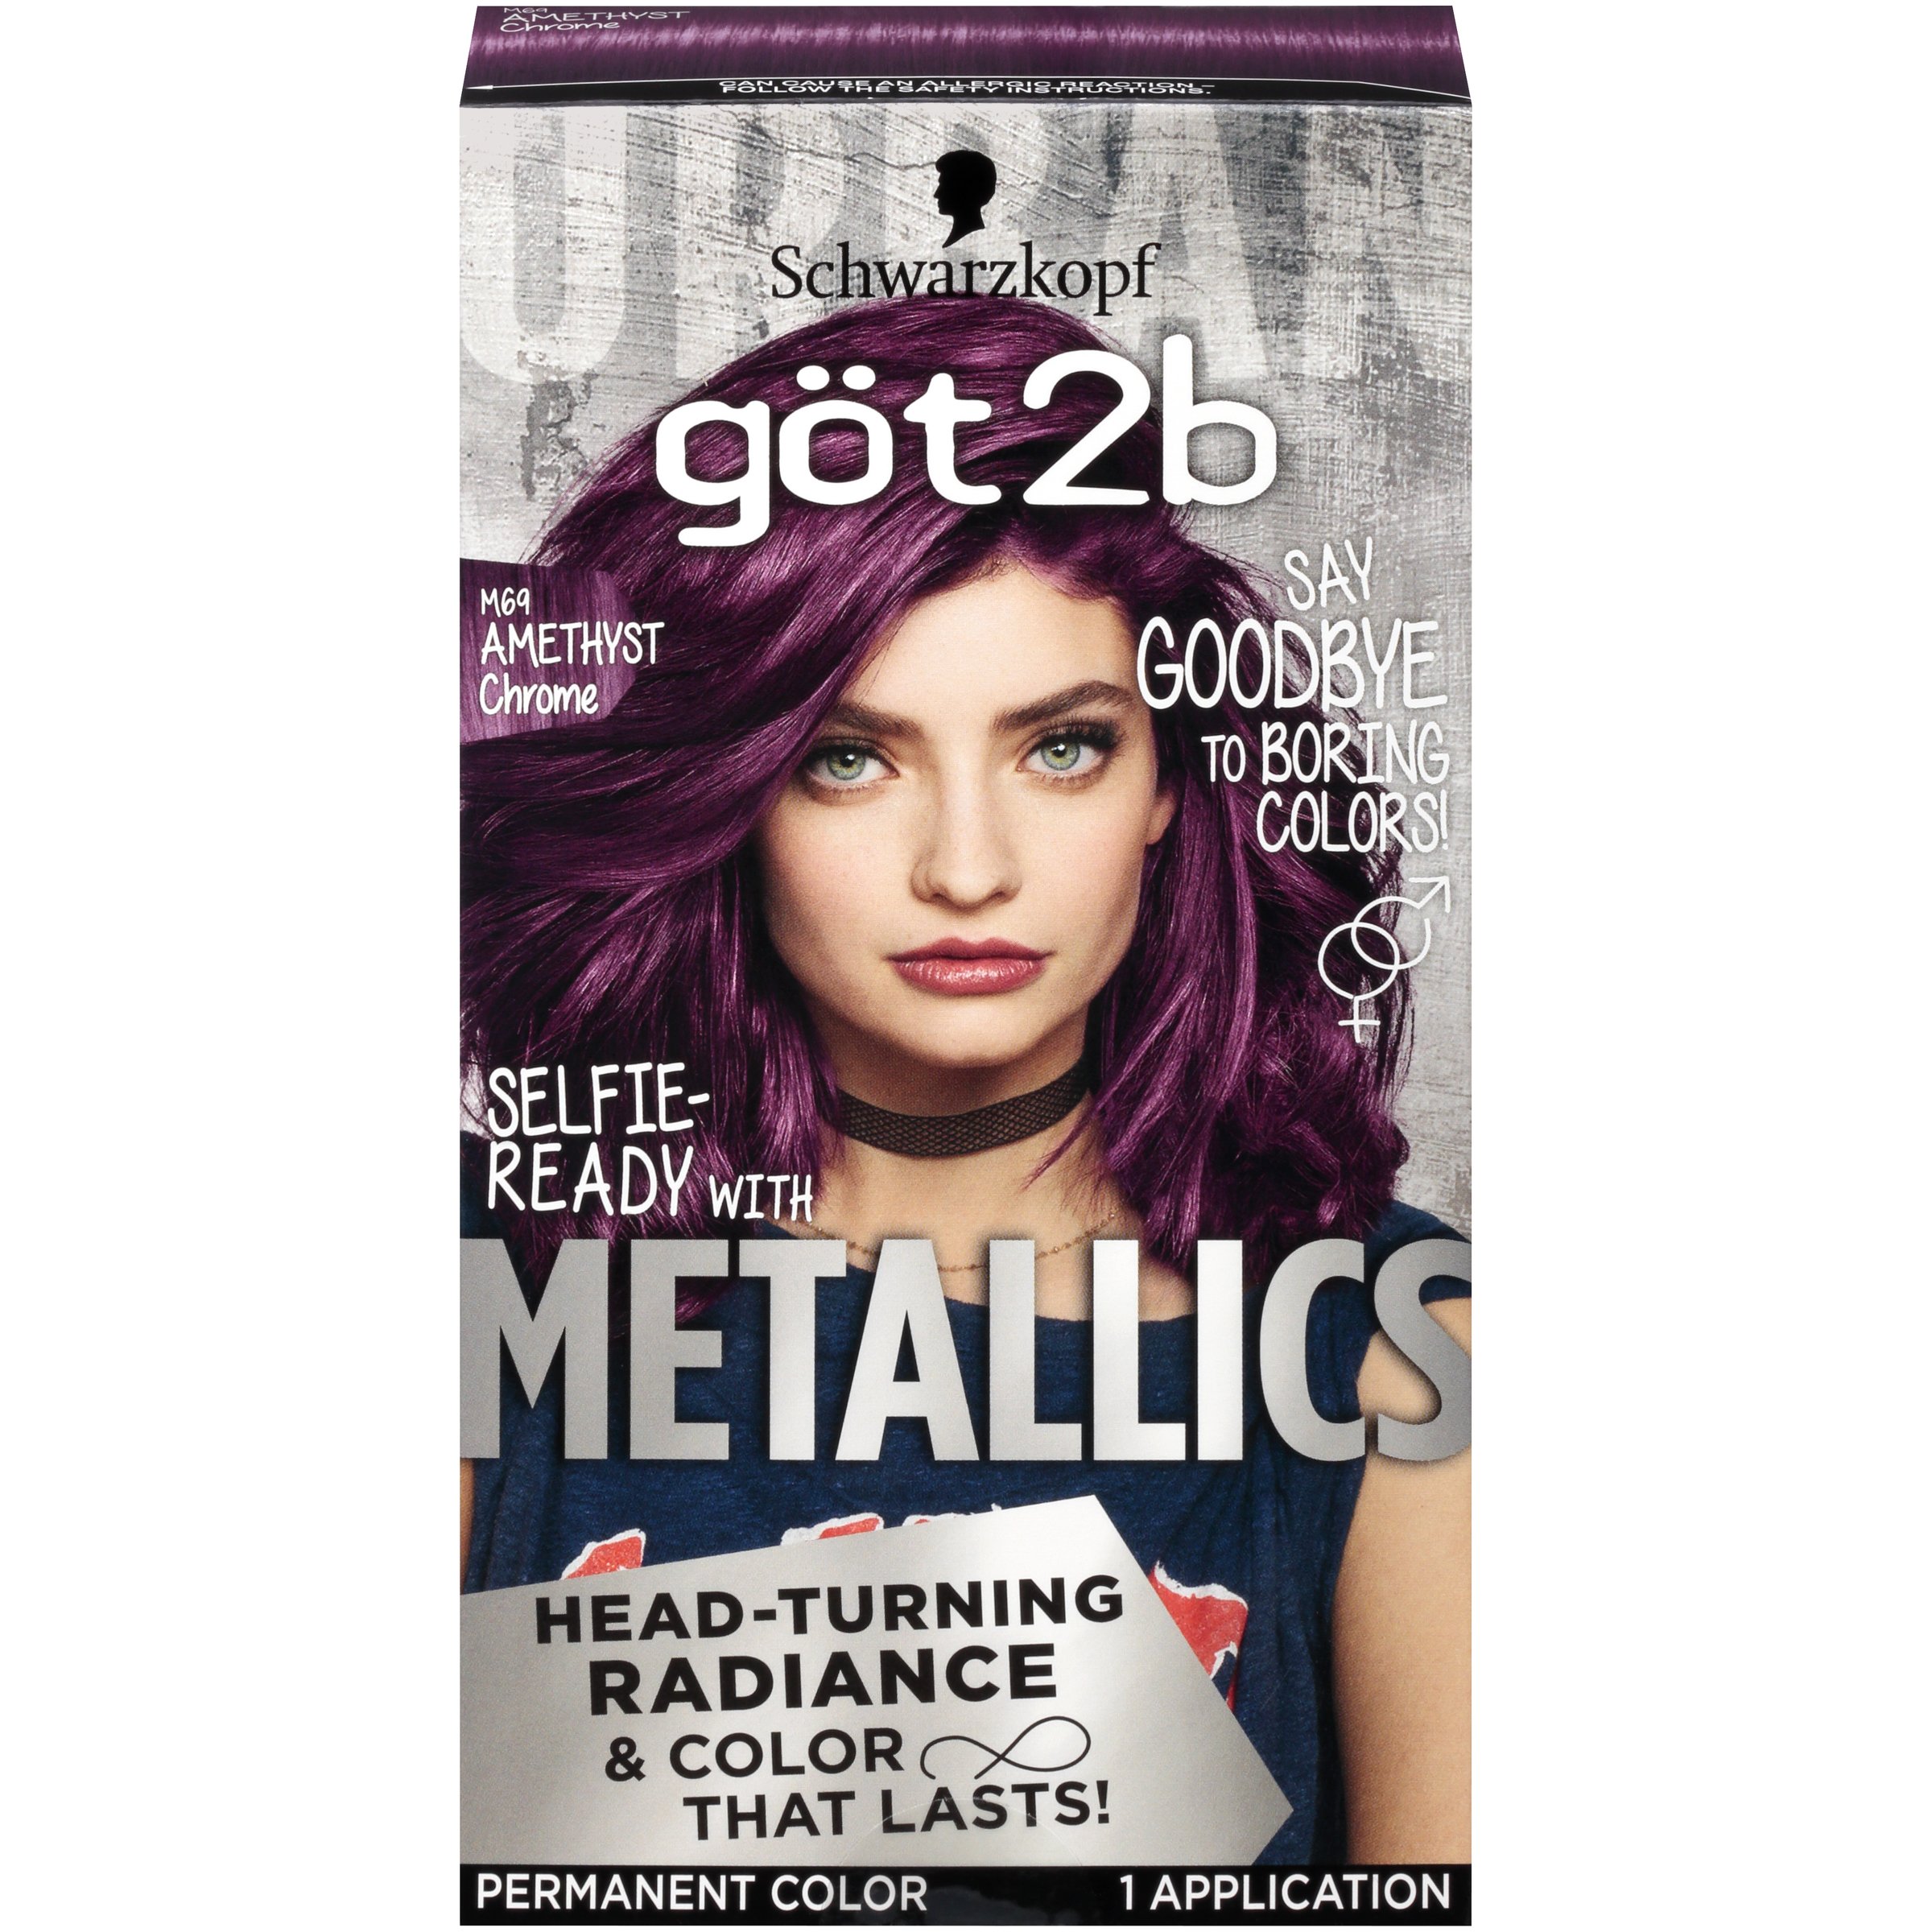 Got2b Metallics Permanent Hair Color, M69 Amethyst Chrome - Shop Hair Color  at H-E-B